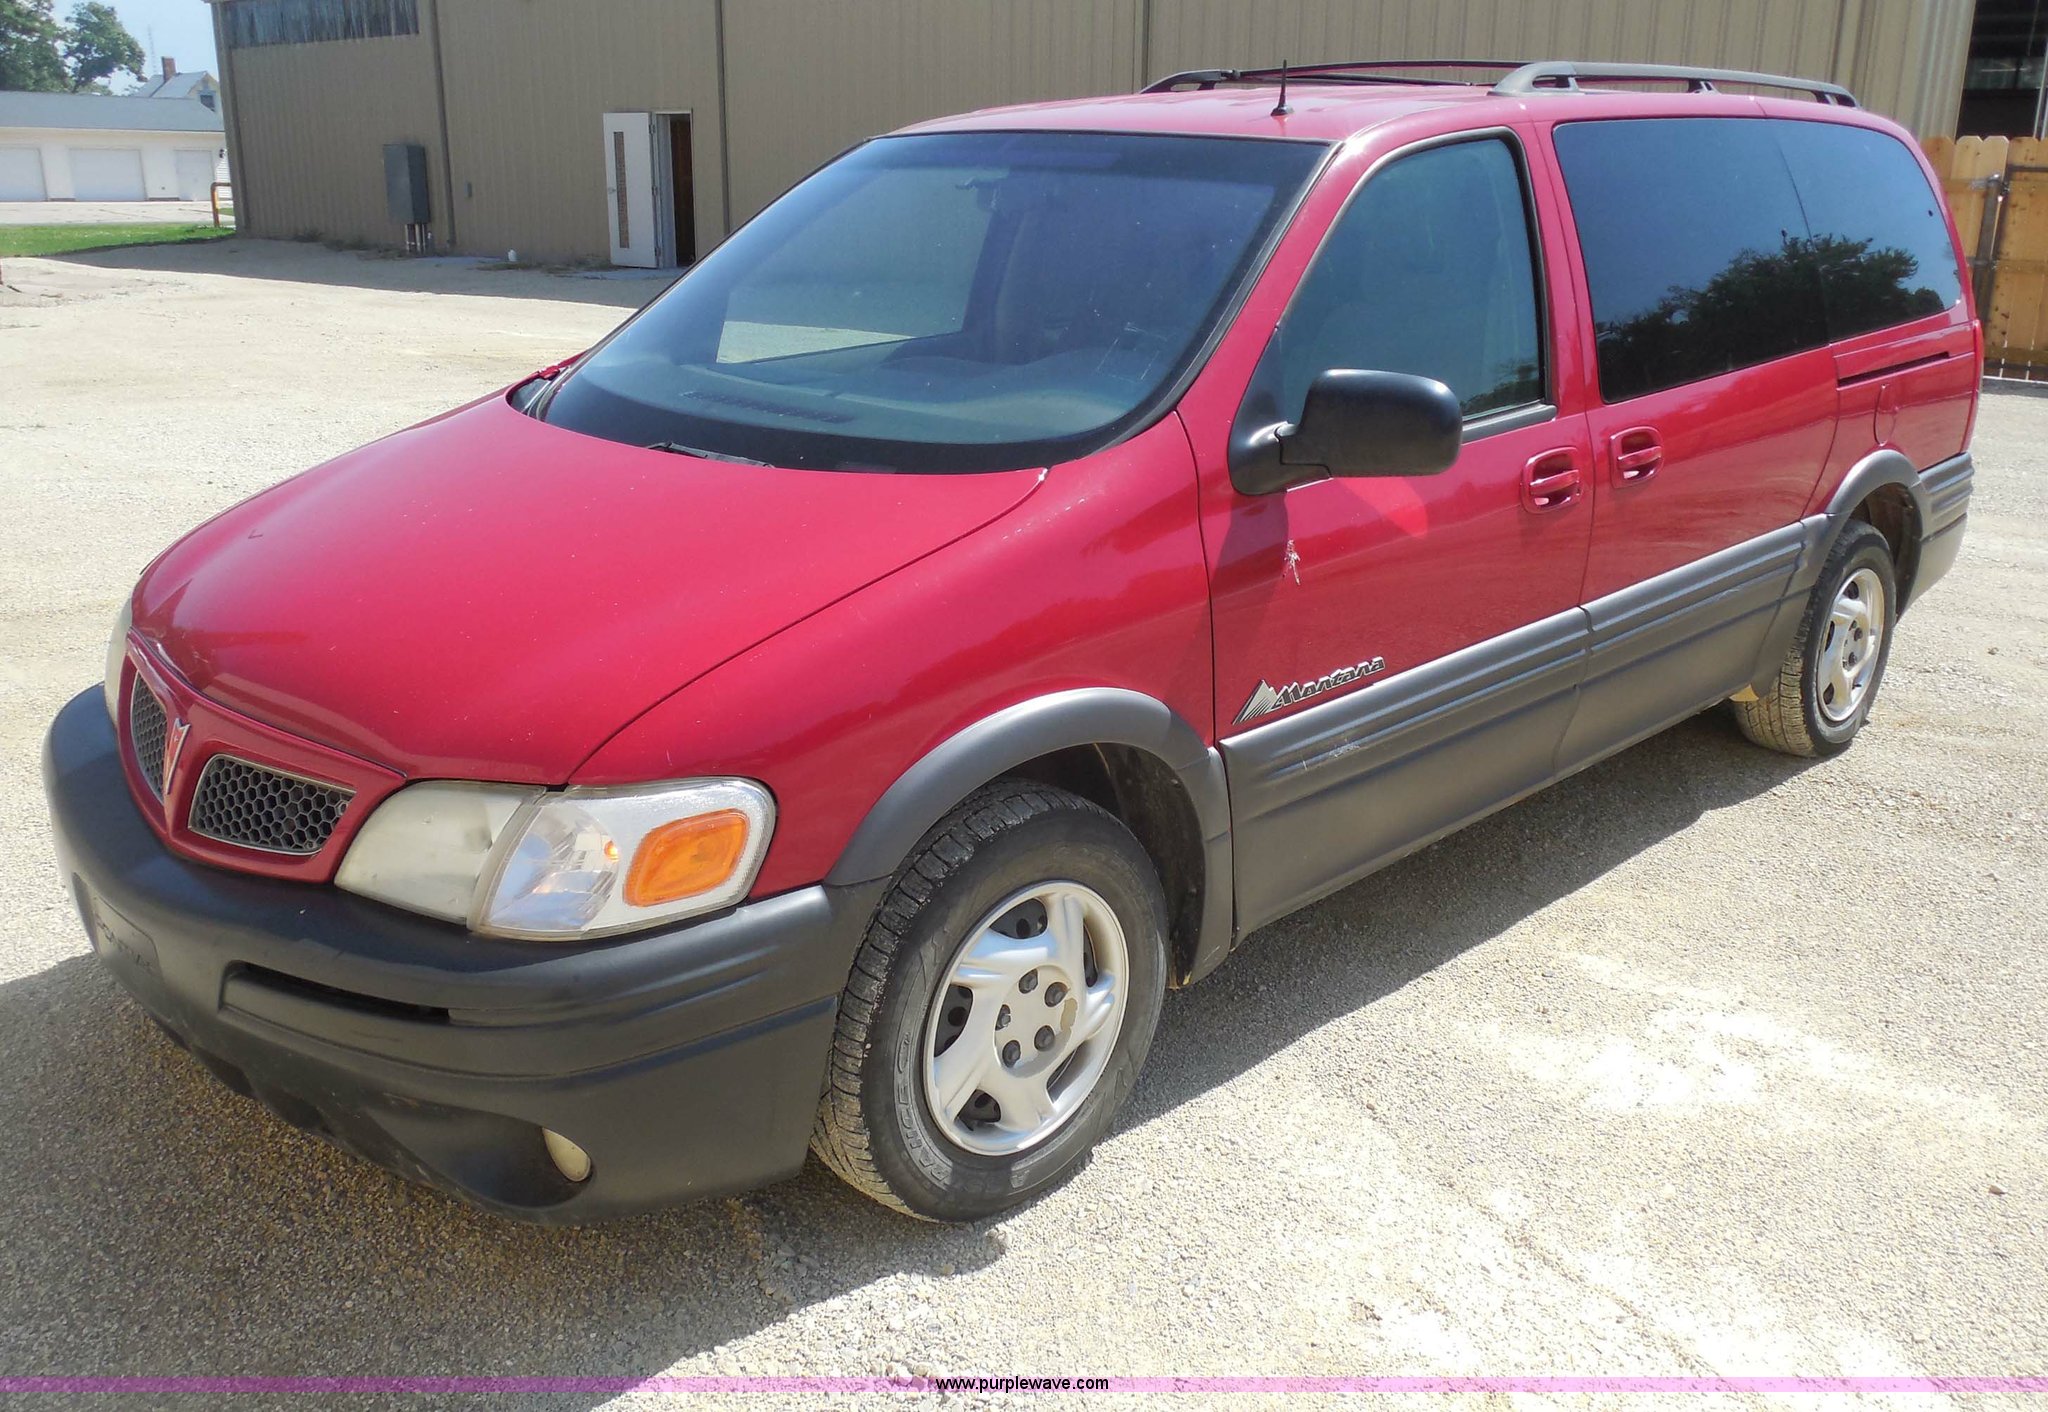 2001 Pontiac Montana minivan in McPherson, KS | Item D8385 sold | Purple  Wave